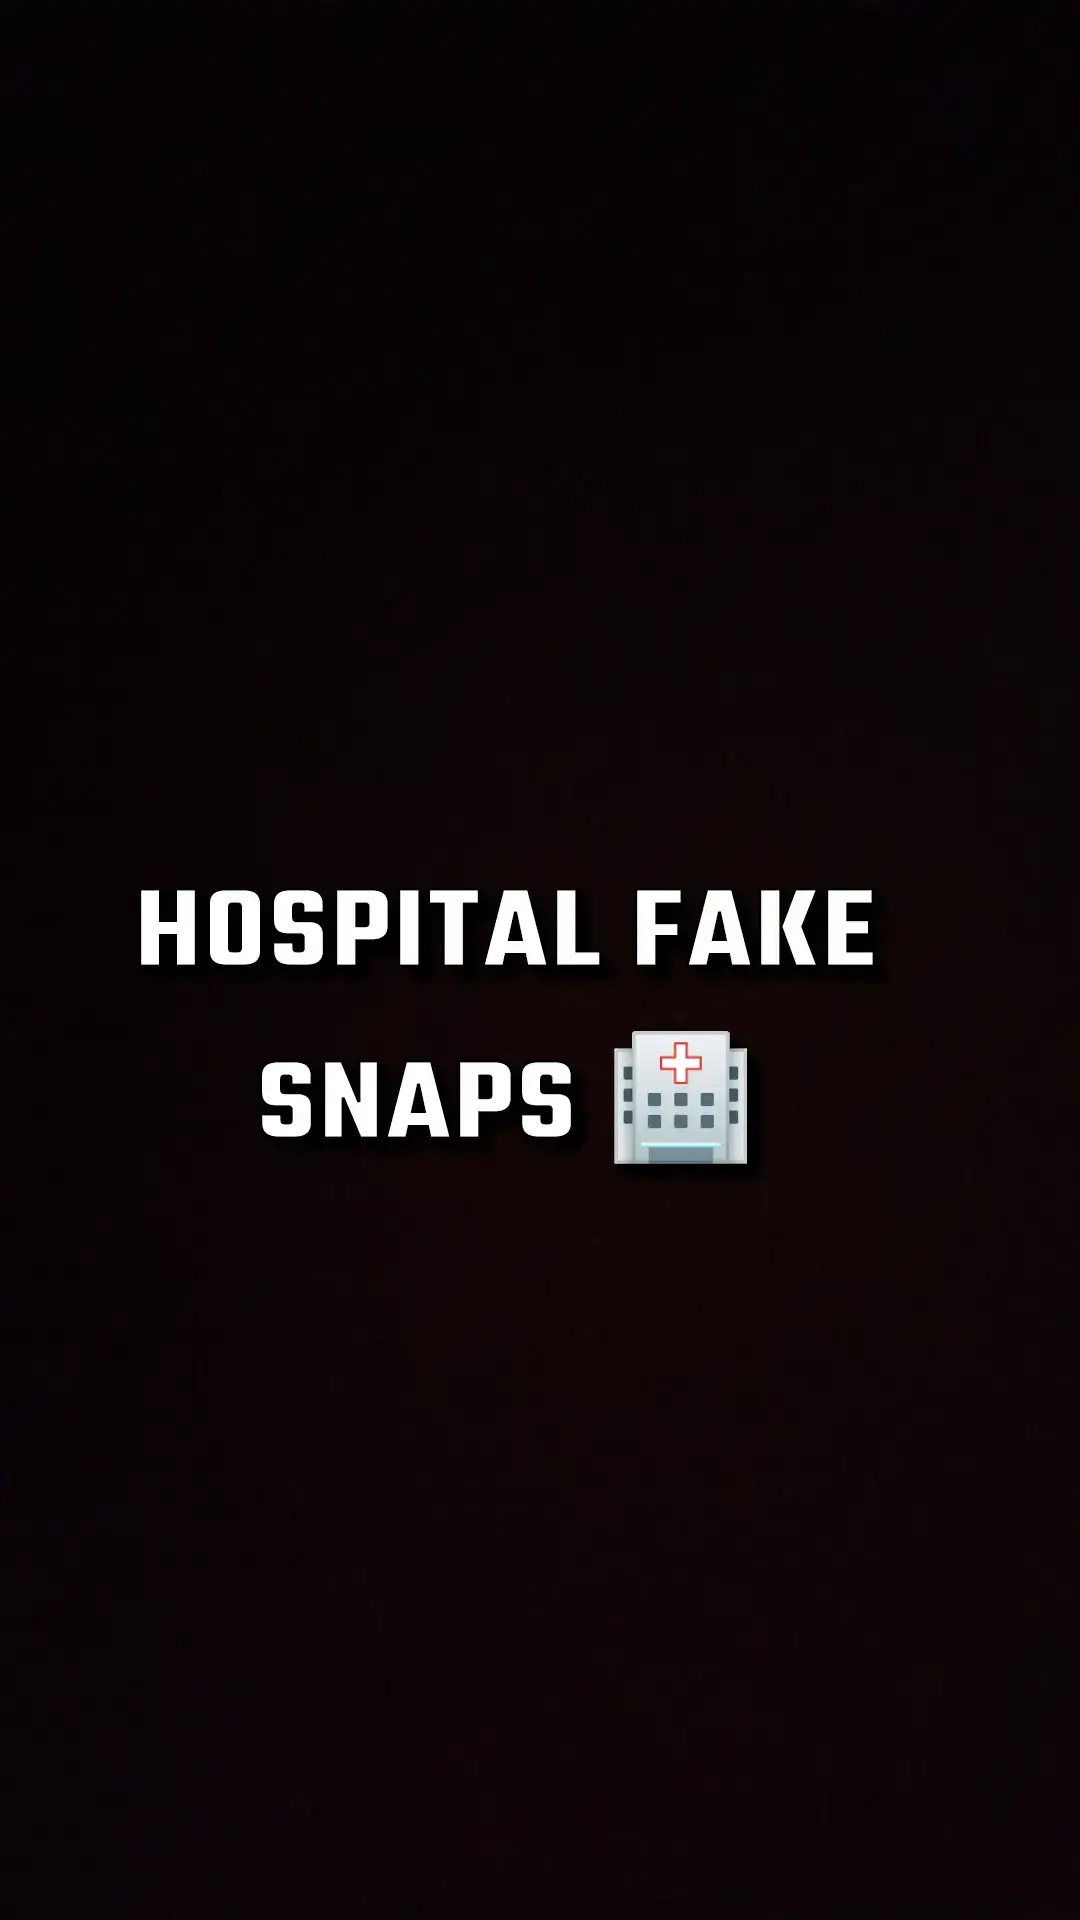 𝐇𝐨𝐬𝐩𝐢𝐭𝐚𝐥 𝐅𝐚𝐤𝐞 𝐒𝐧𝐚𝐩𝐬 🏥#hospital #fakesnaps #fypシ #fyppppppppppppppppppppppp #drip #fypシ #hospital #snaps #fypシ 